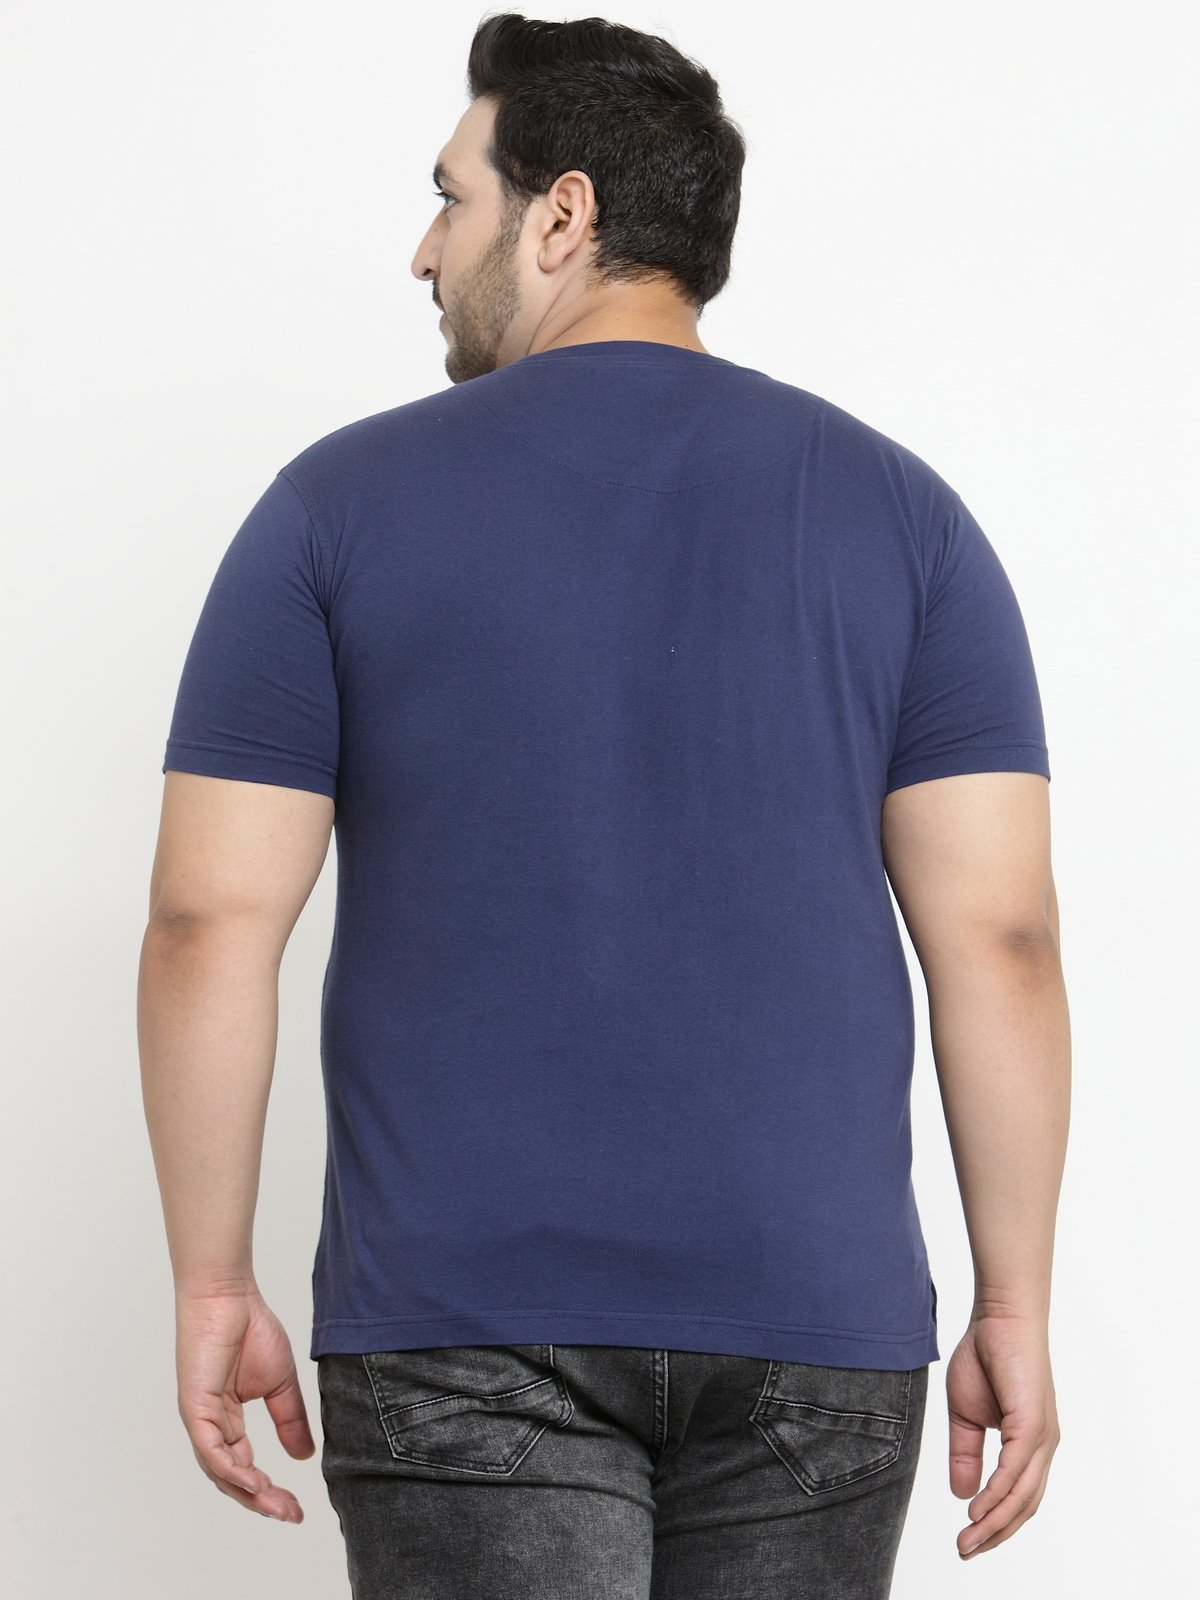 Shop PlusS Men's T-Shirt Half Sleeves-Back